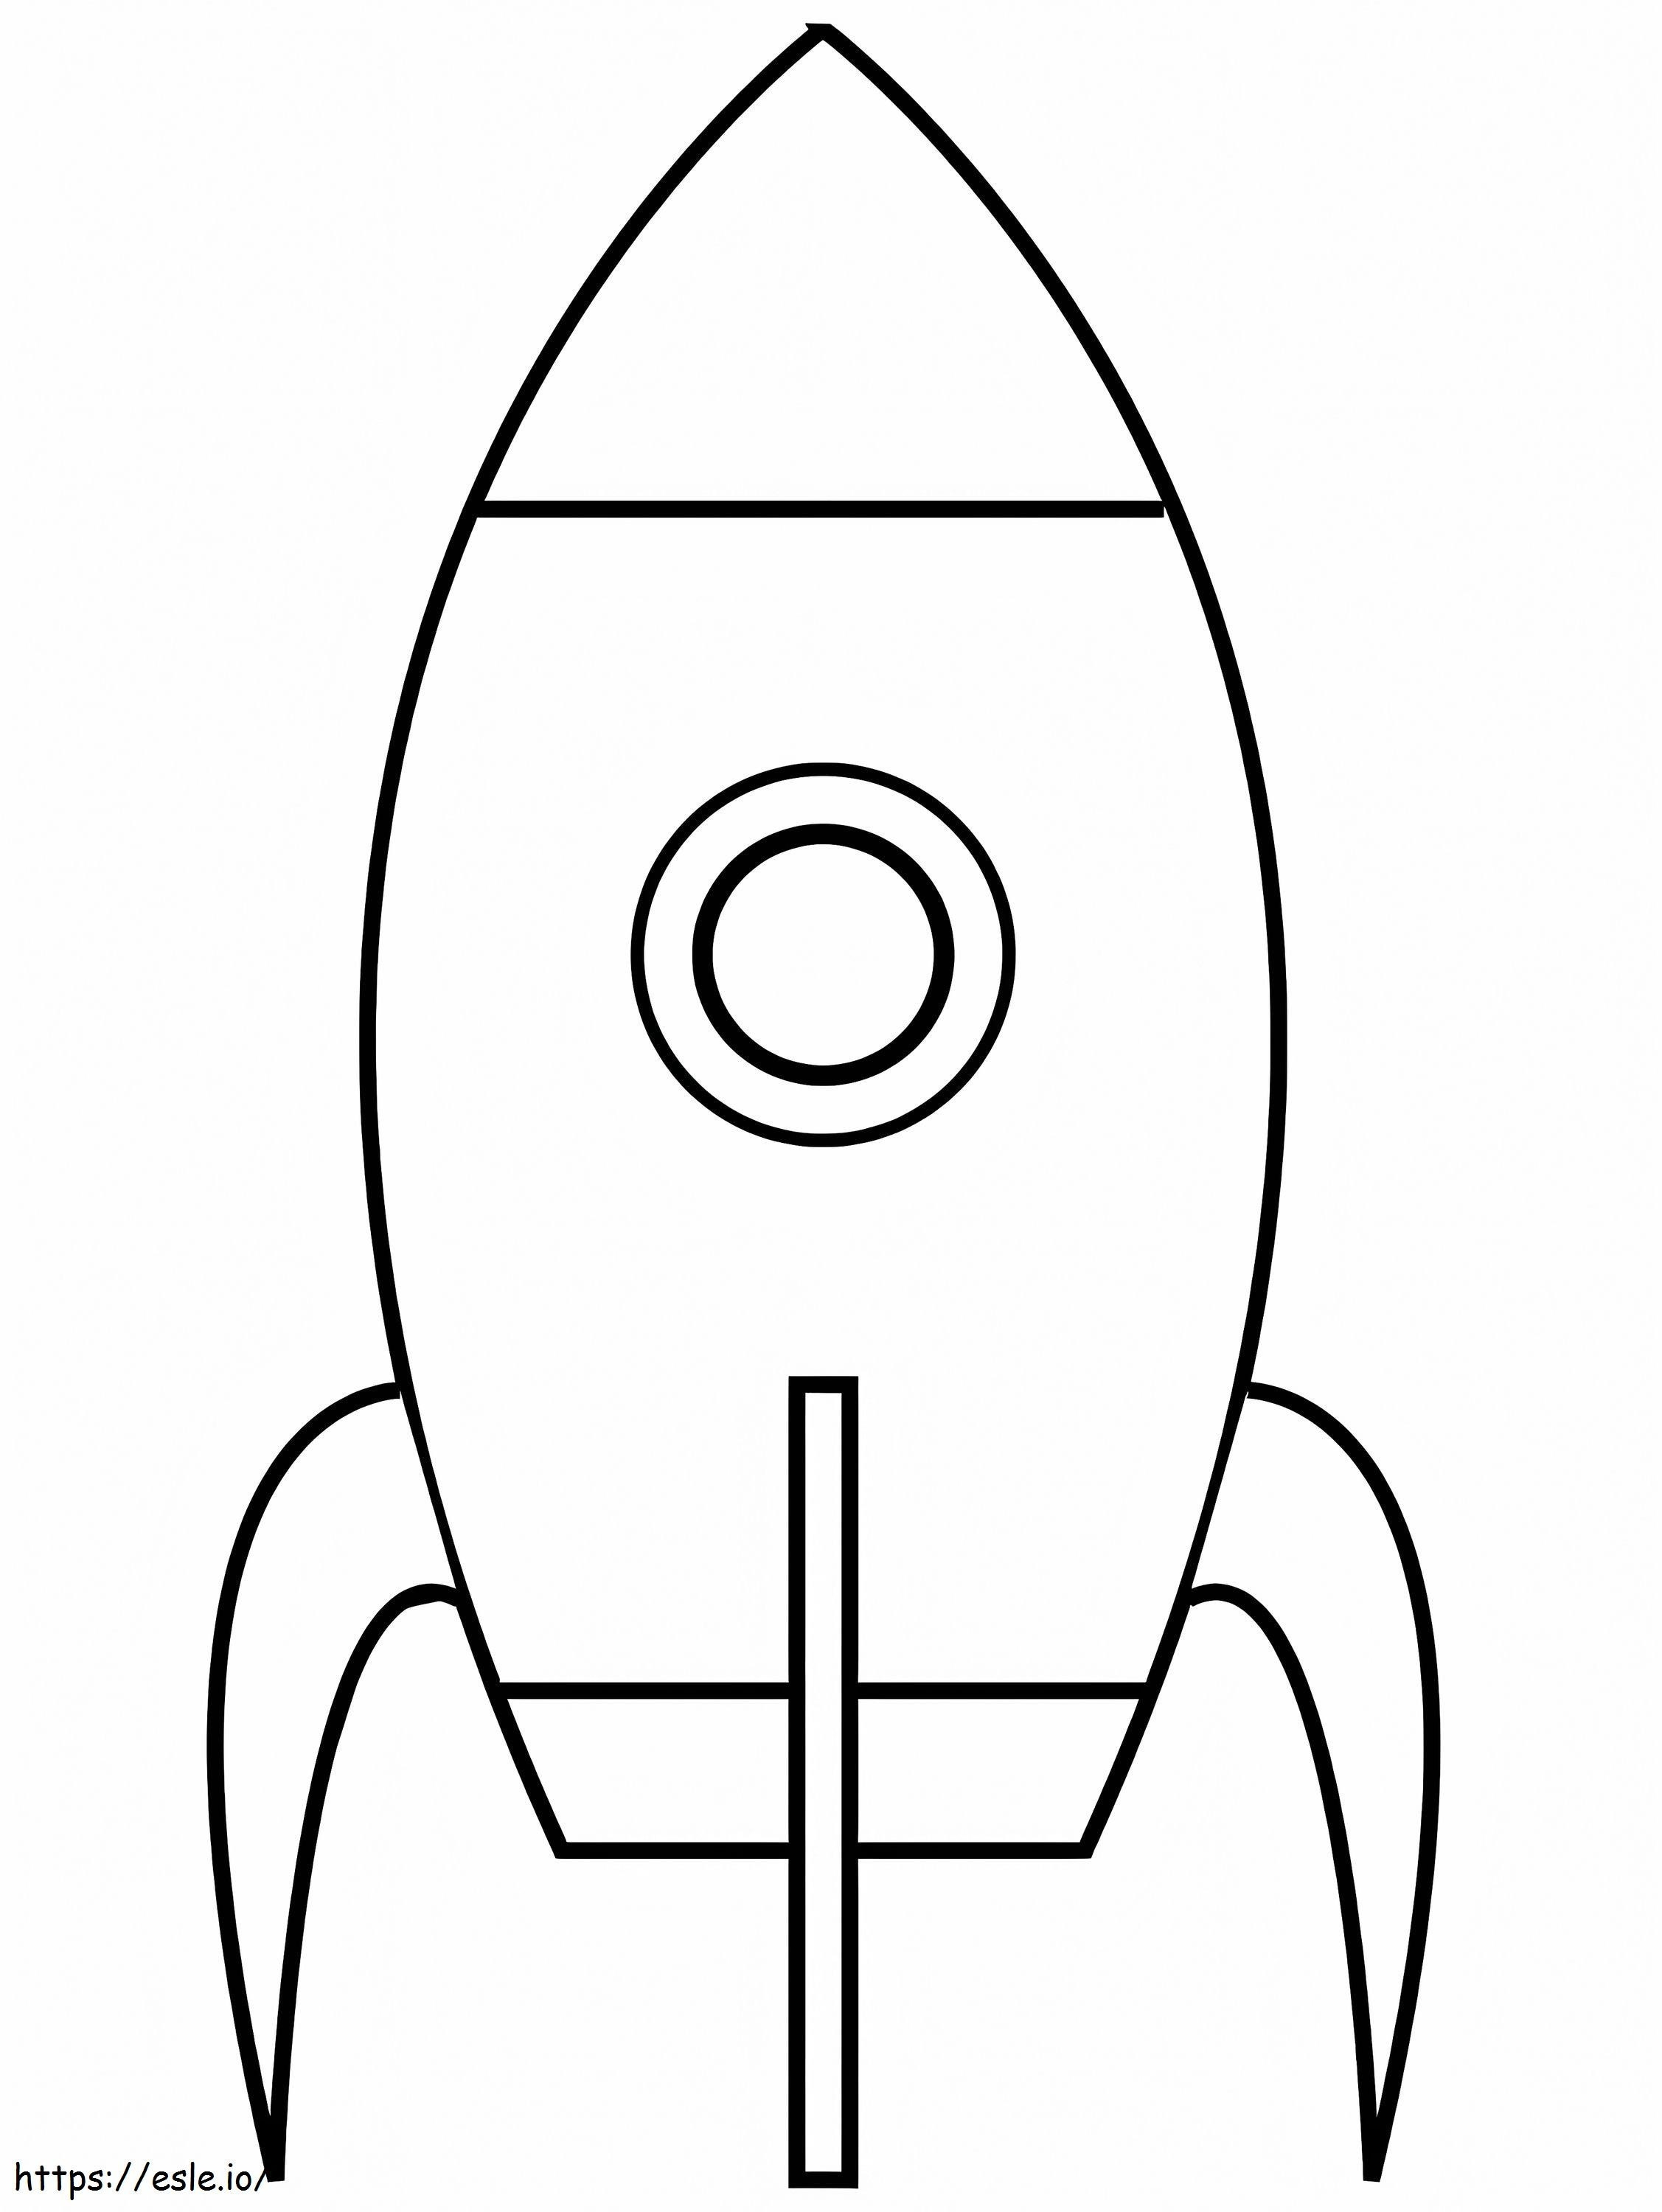 Easy Rocket coloring page